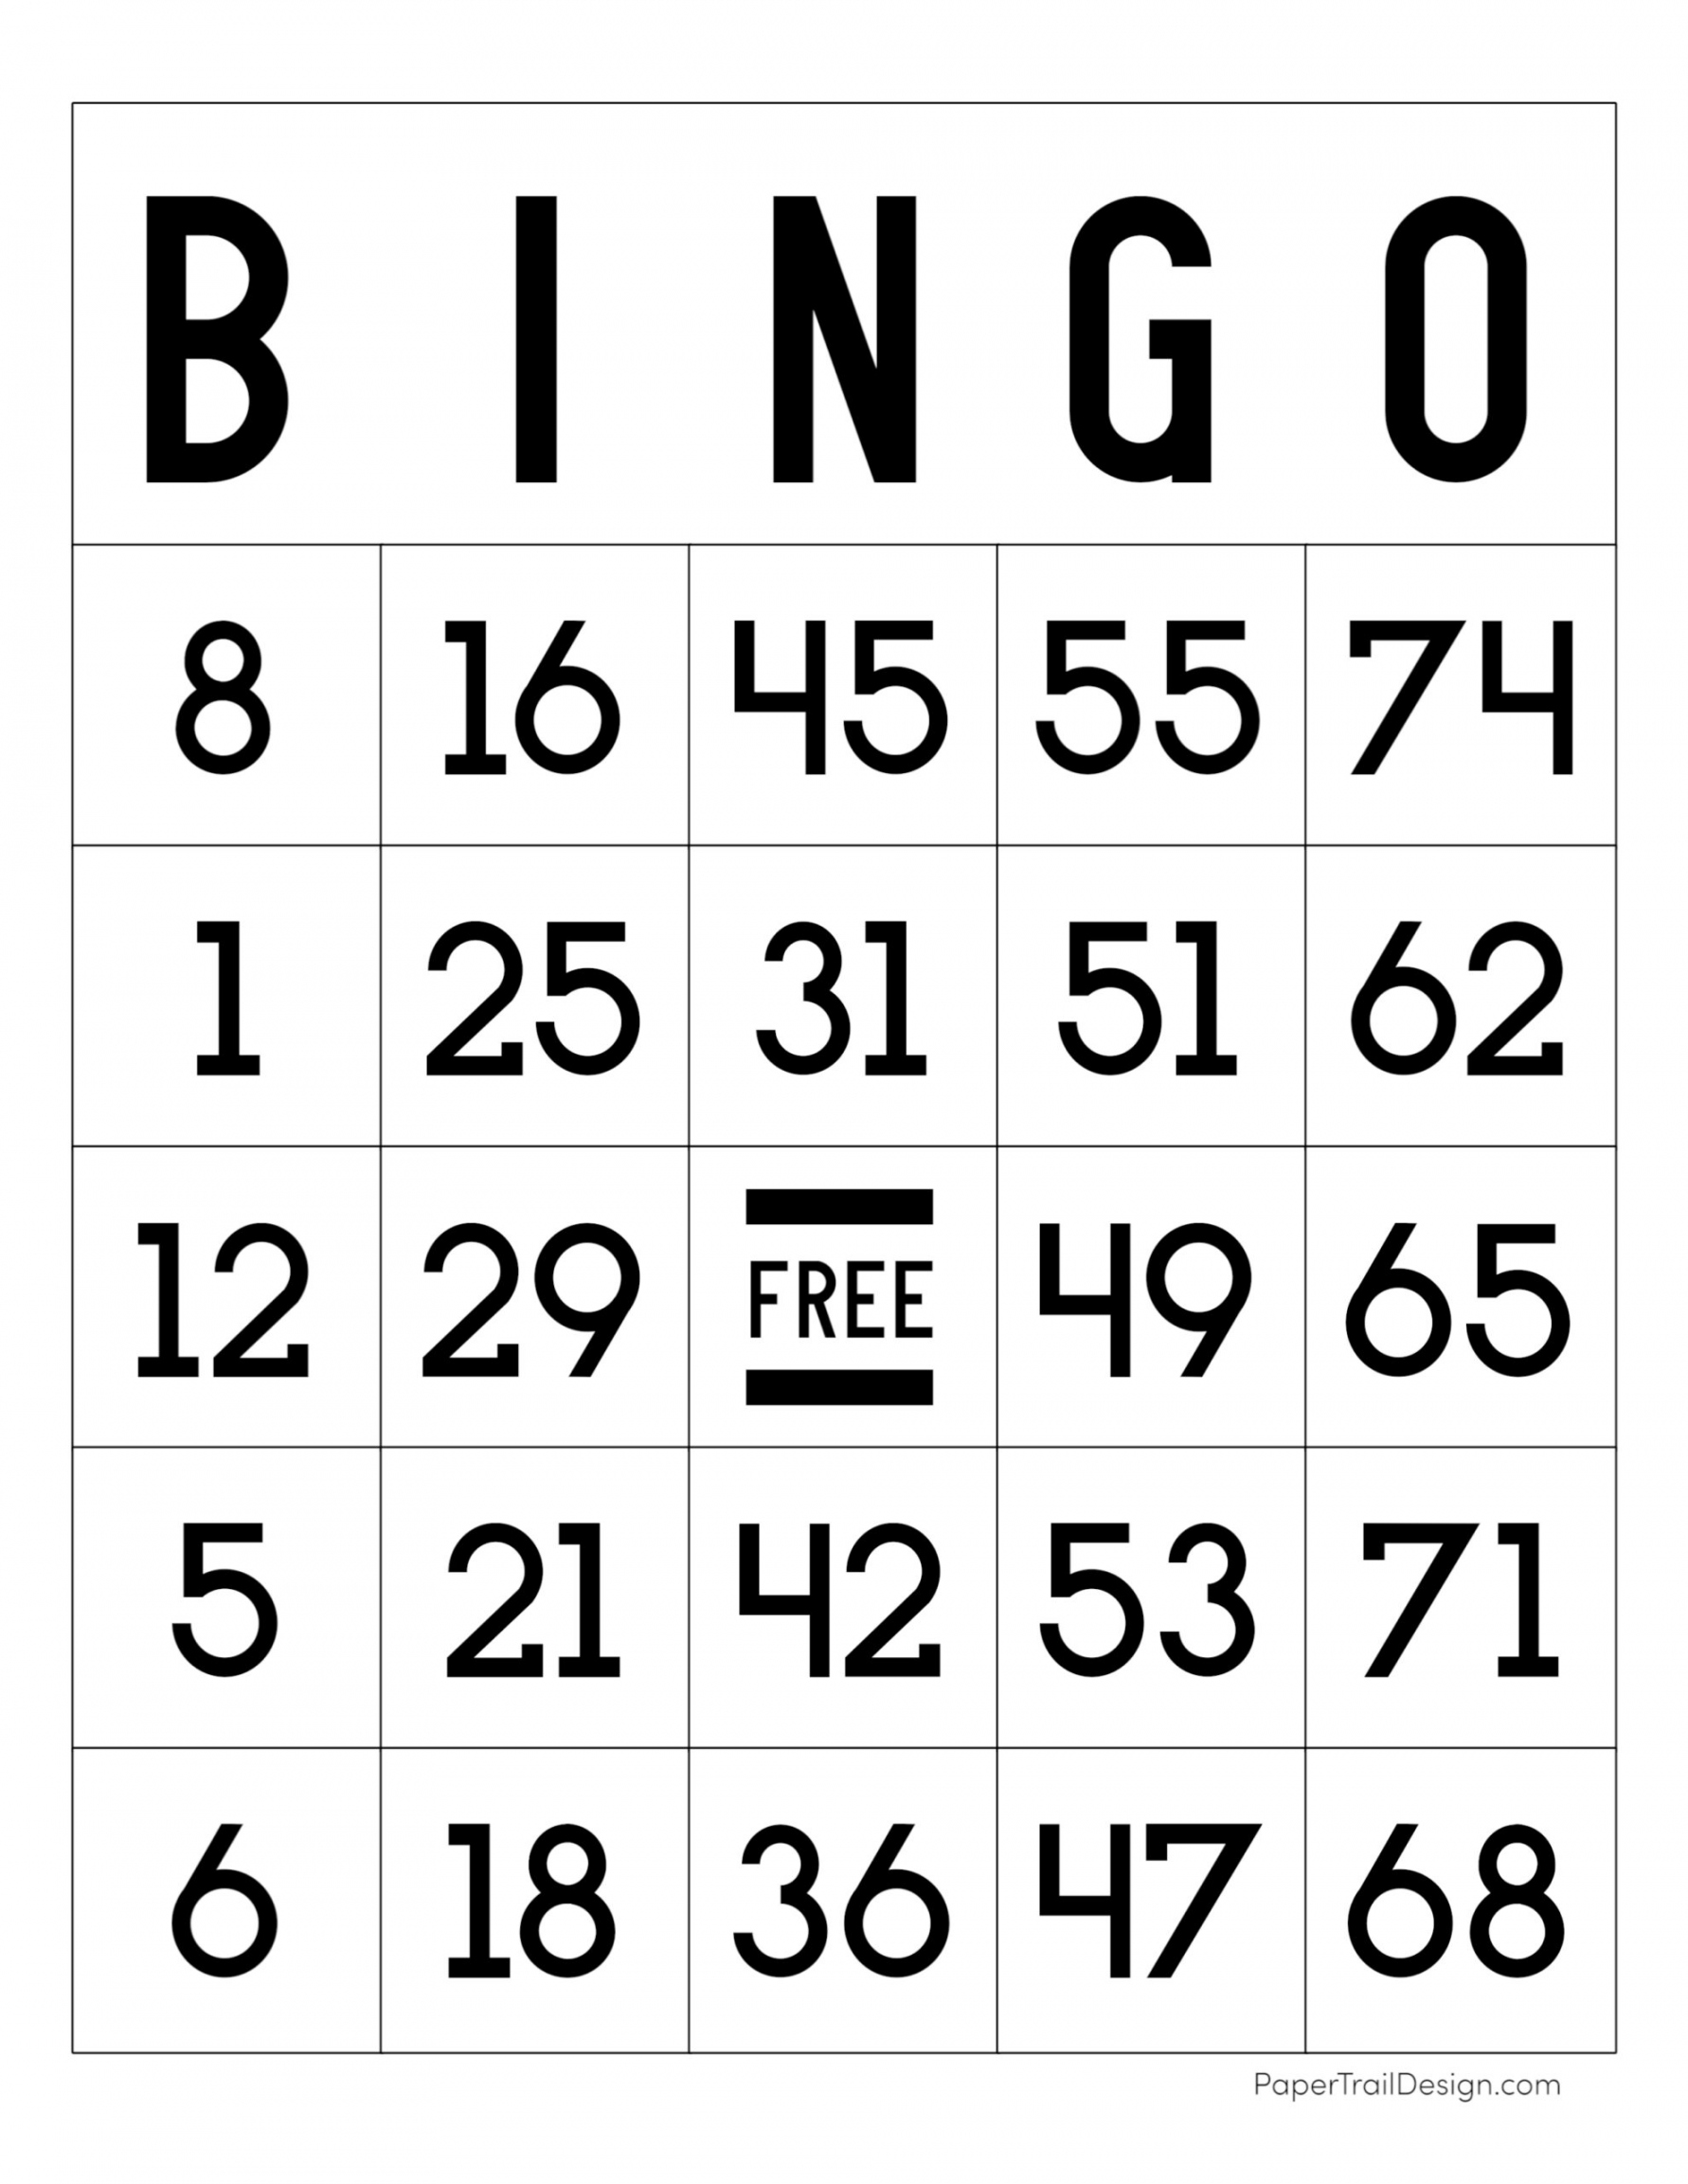 Printable Bingo Cards Free - Printable - Free Printable Bingo Cards - Paper Trail Design